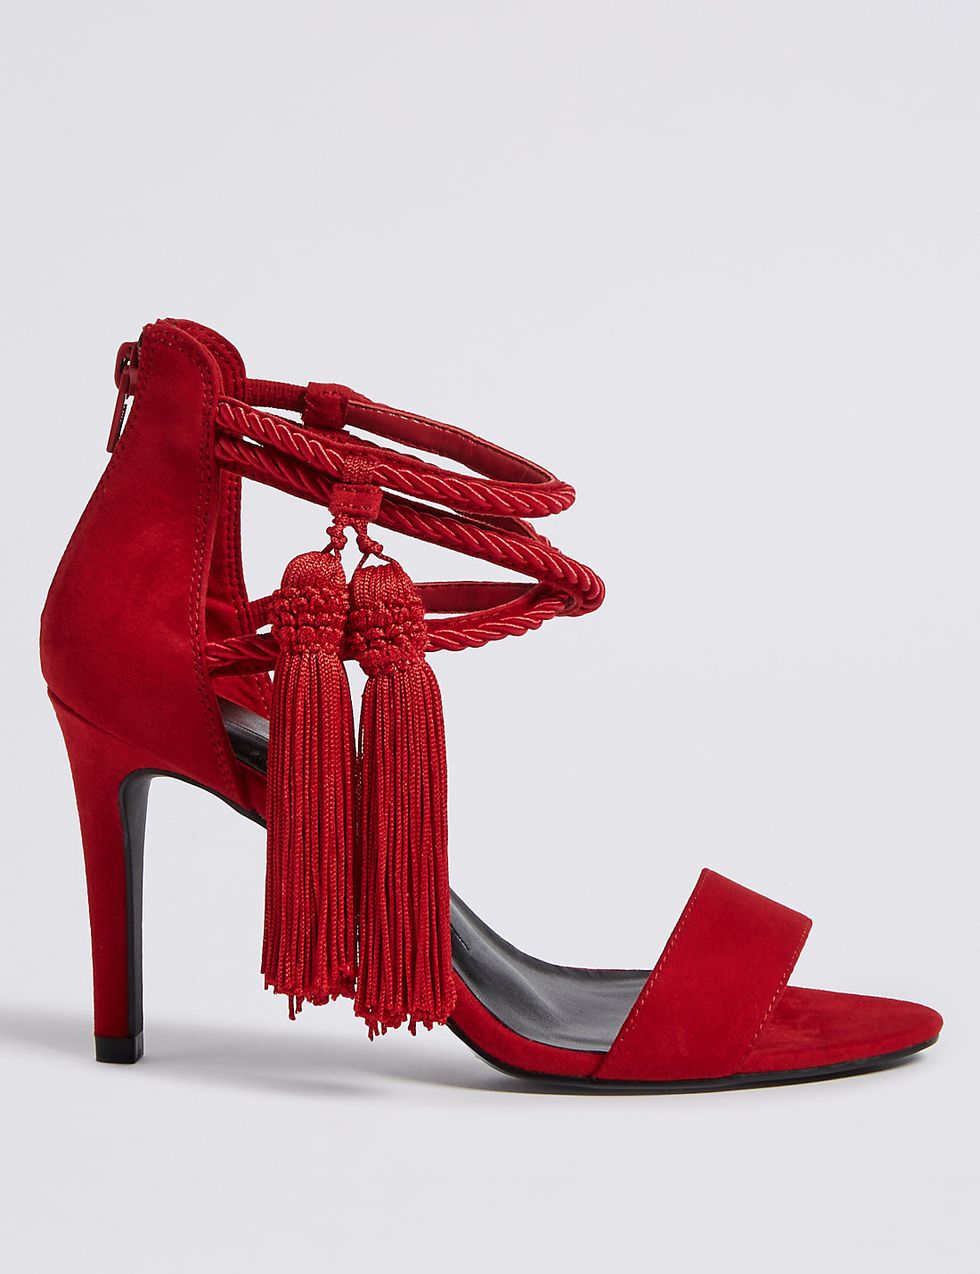 Footwear, High heels, Red, Basic pump, Shoe, Sandal, Leg, Court shoe, Carmine, 